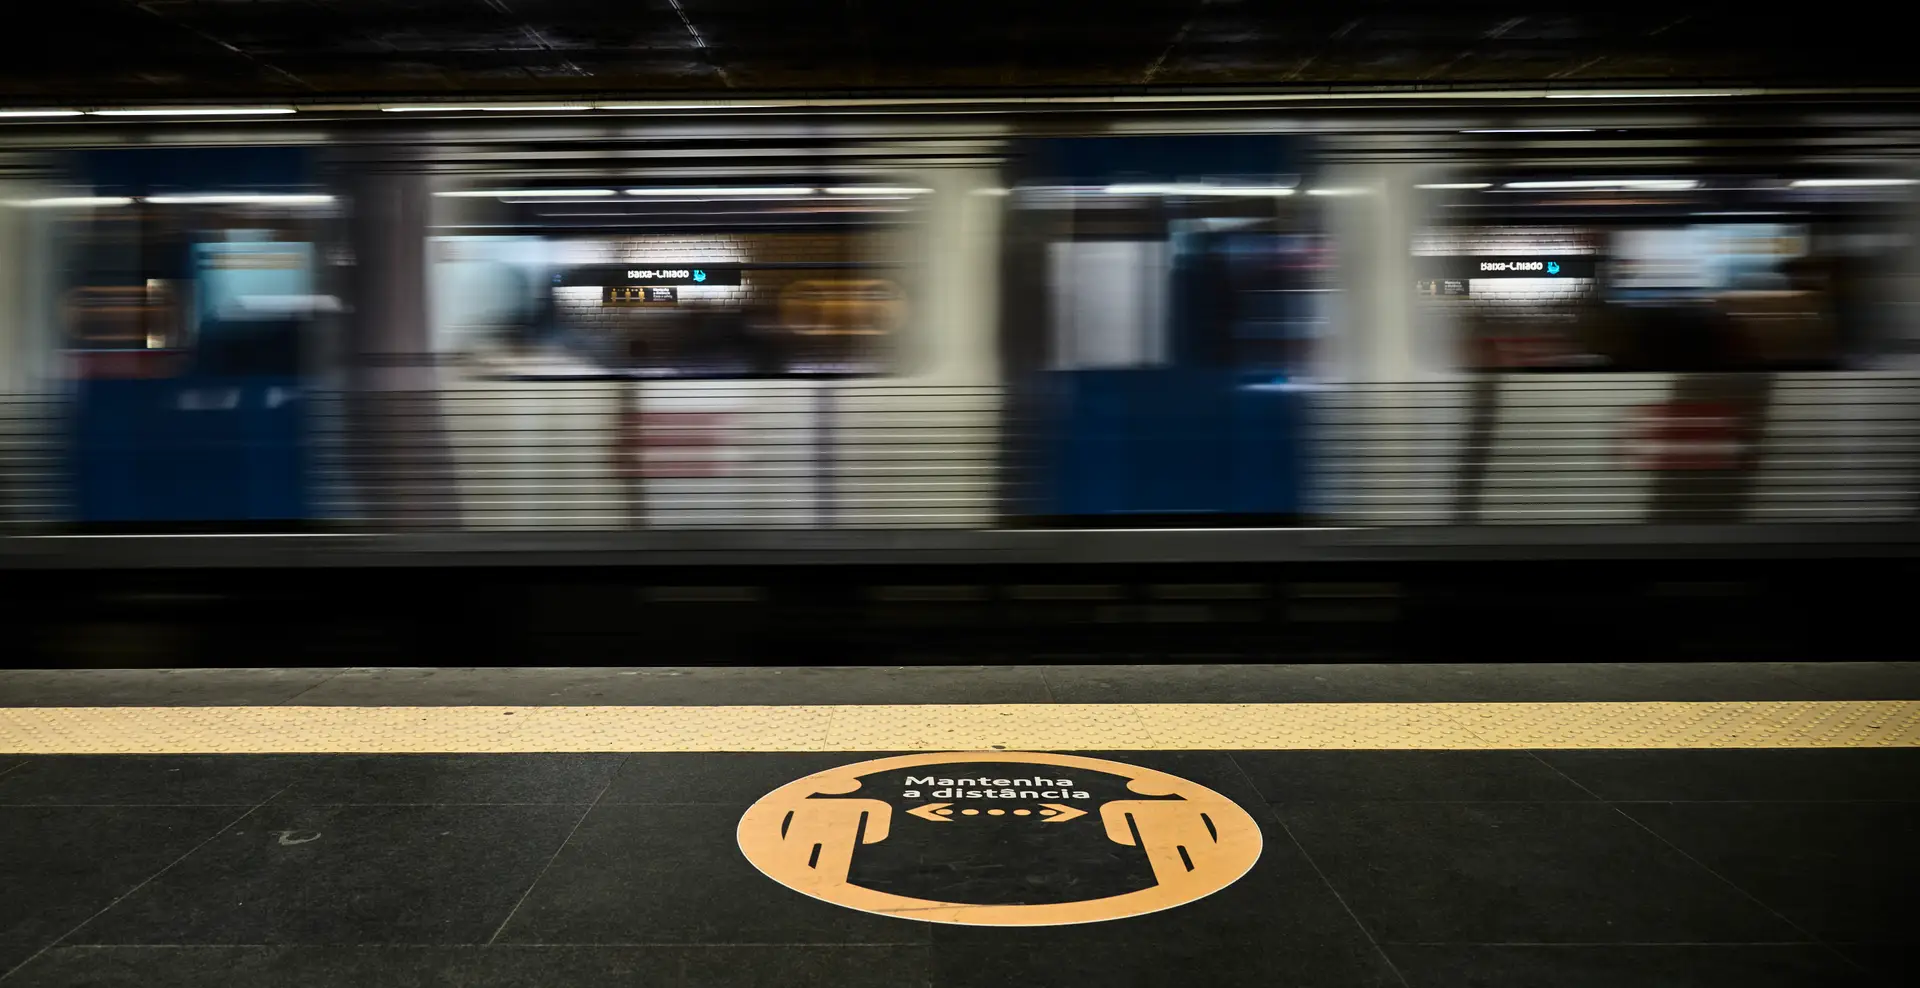 Greve no metro de Lisboa: tempos de espera podem chegar aos 25 minutos